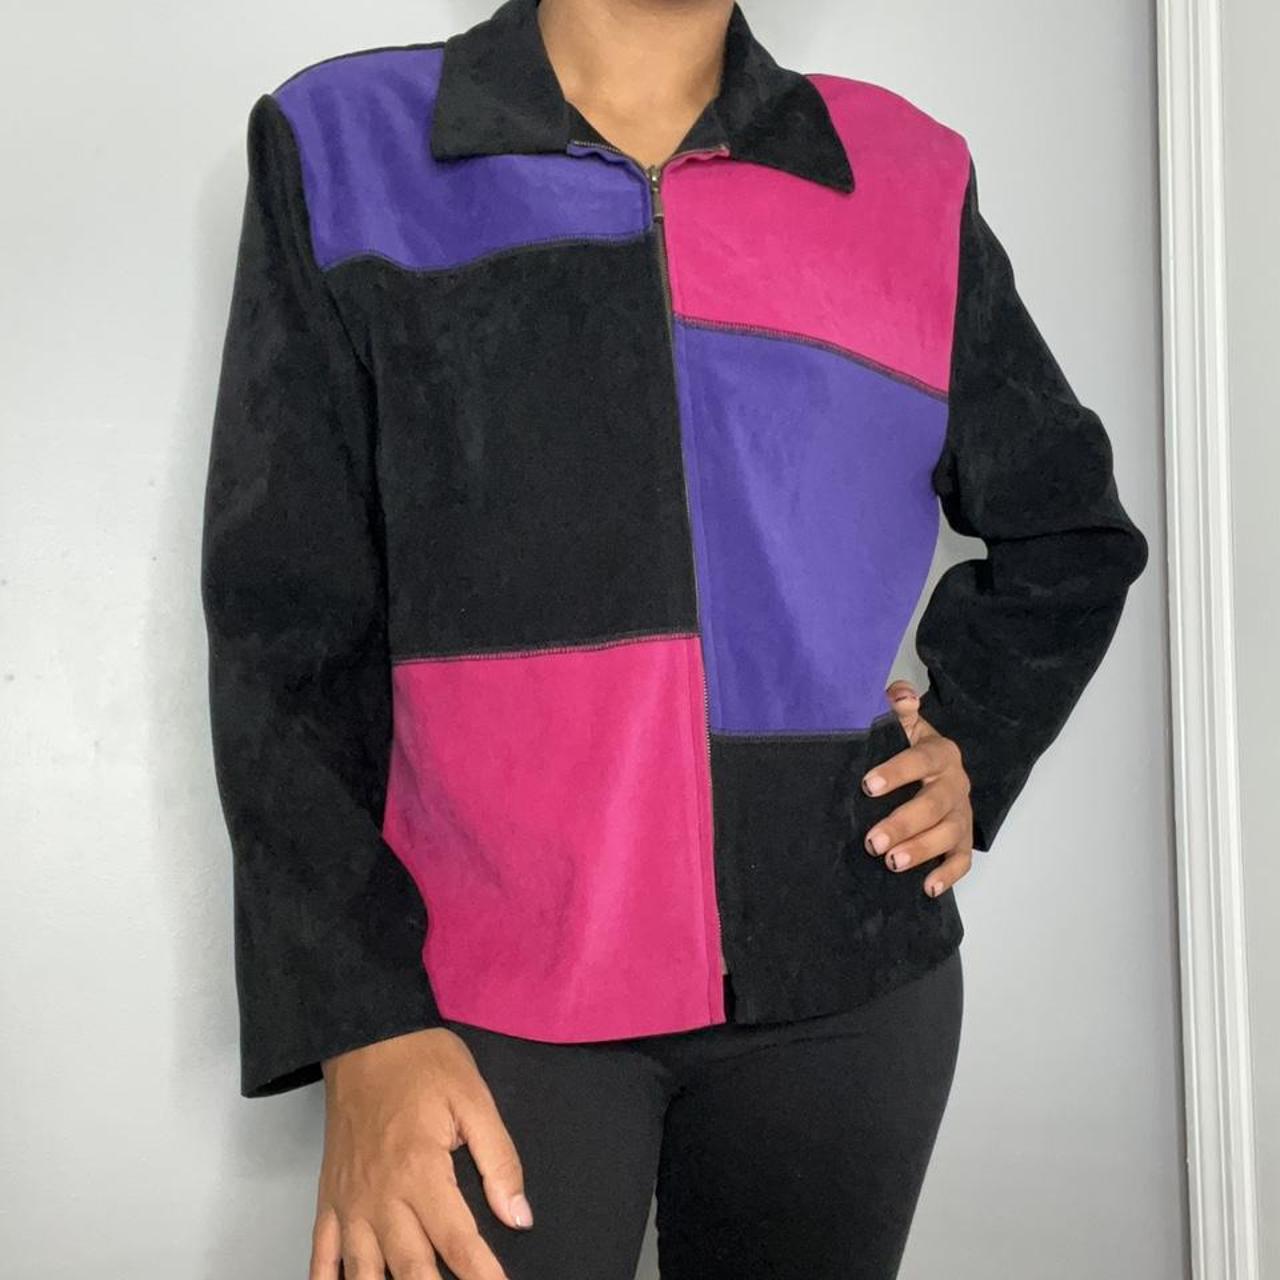 Product Image 2 - Color block zip up jacket